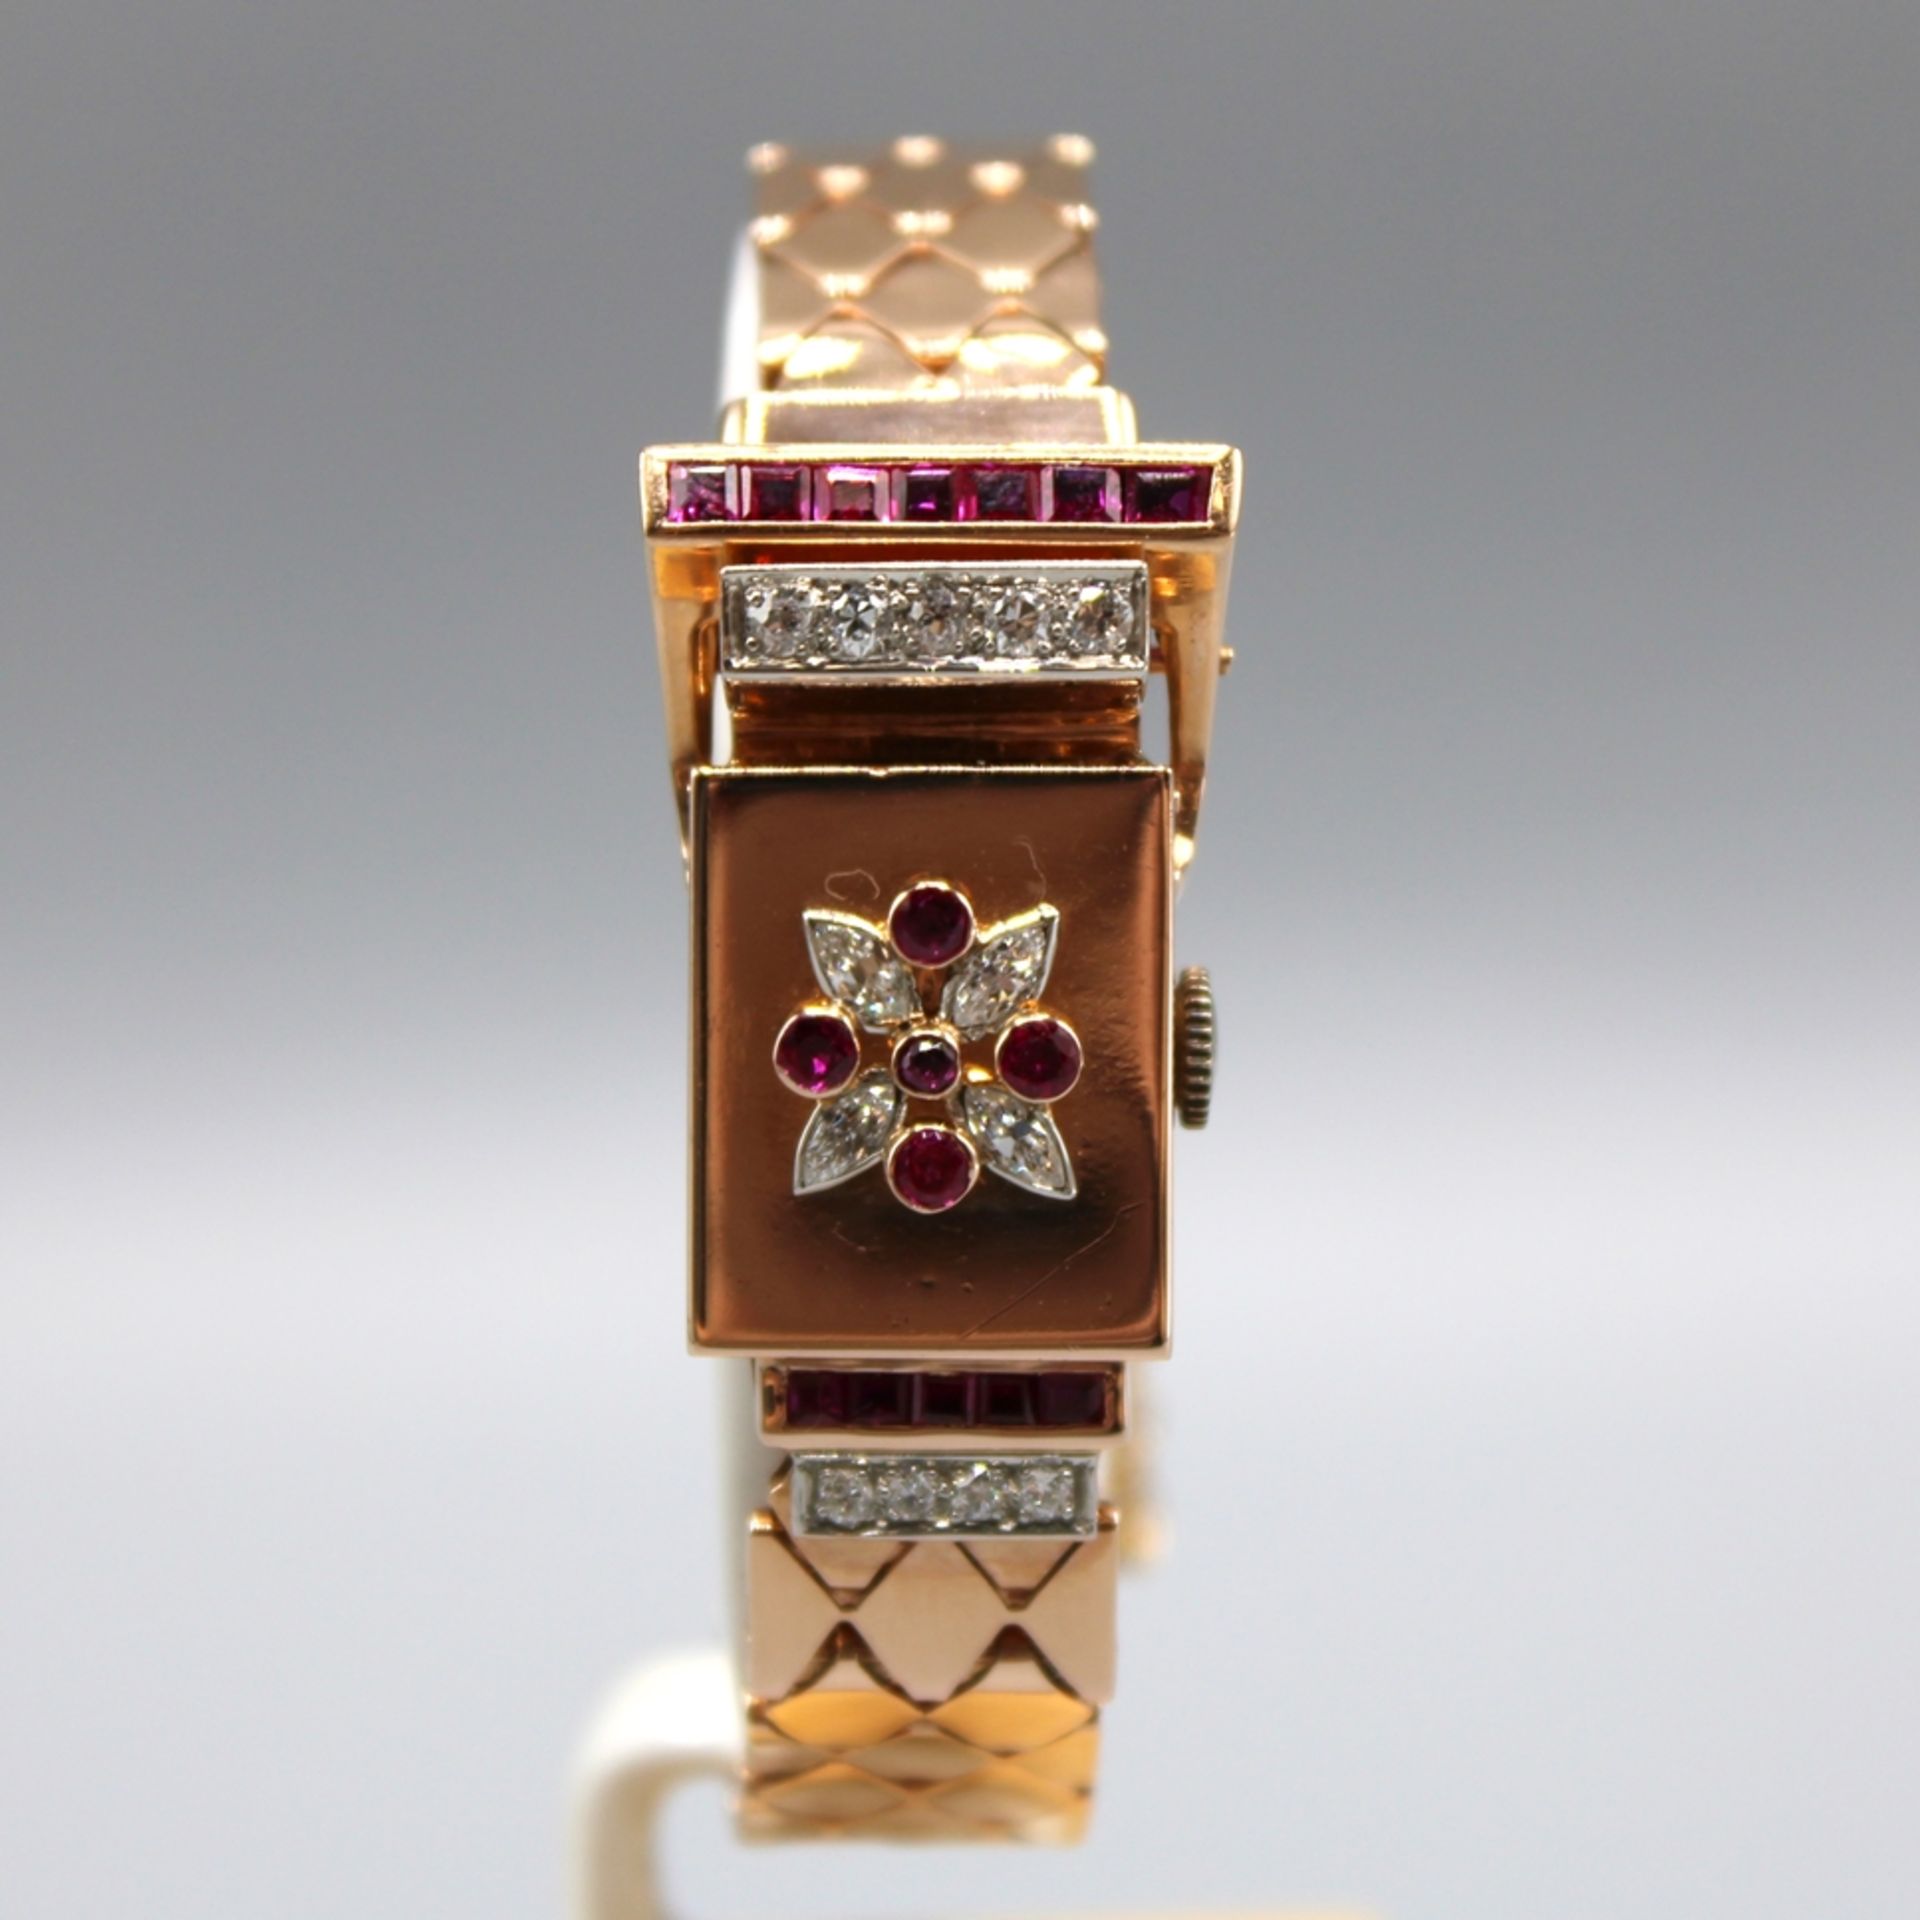 Armband Uhr Rotgold 585 mit Diamanten u. Rubinen besetzt, 17 Rubine, 13 Diamanten in Brillant- u. N